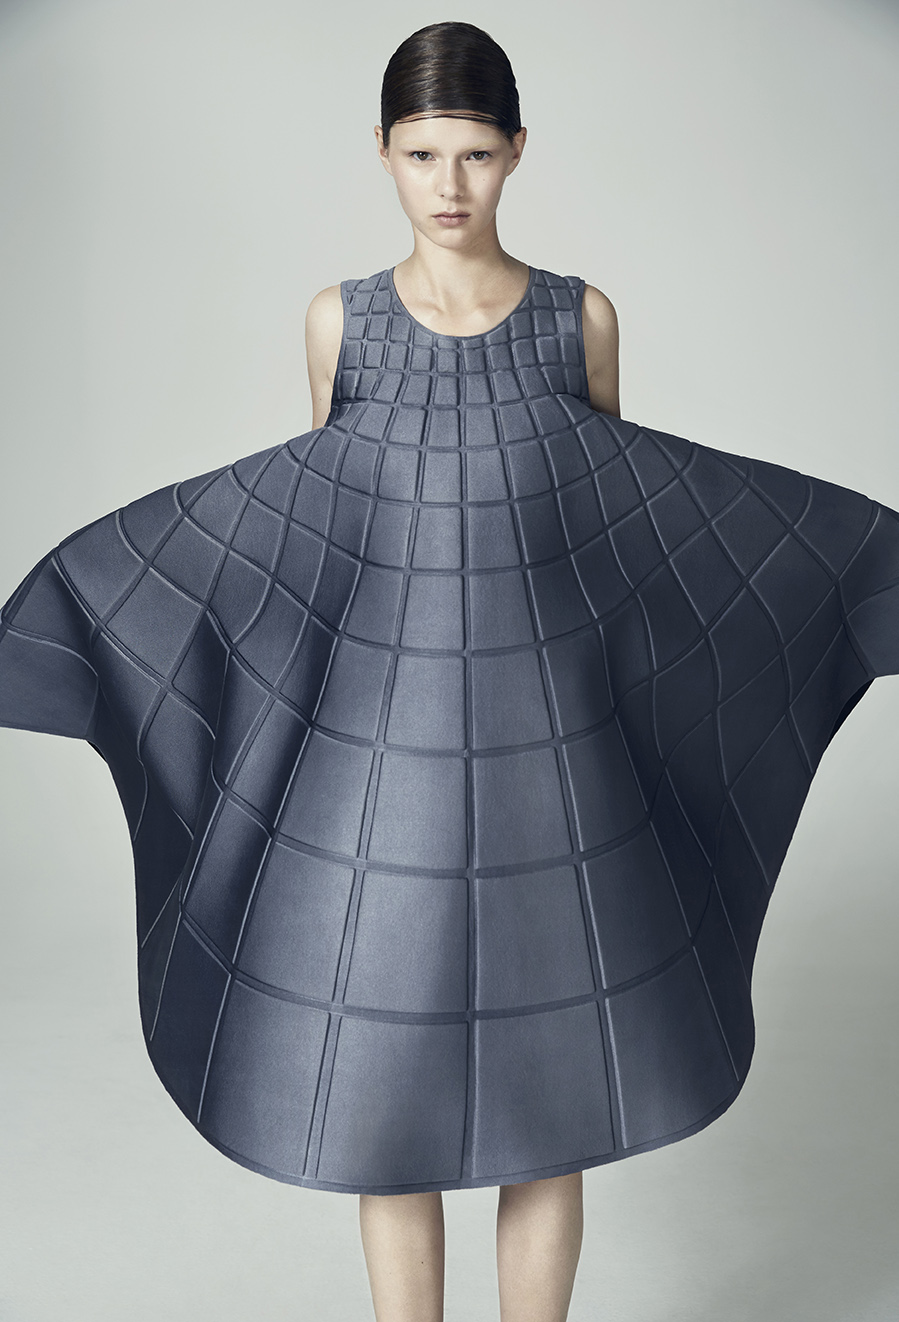 Matilda Norberg | Sculptural Knitwear Design